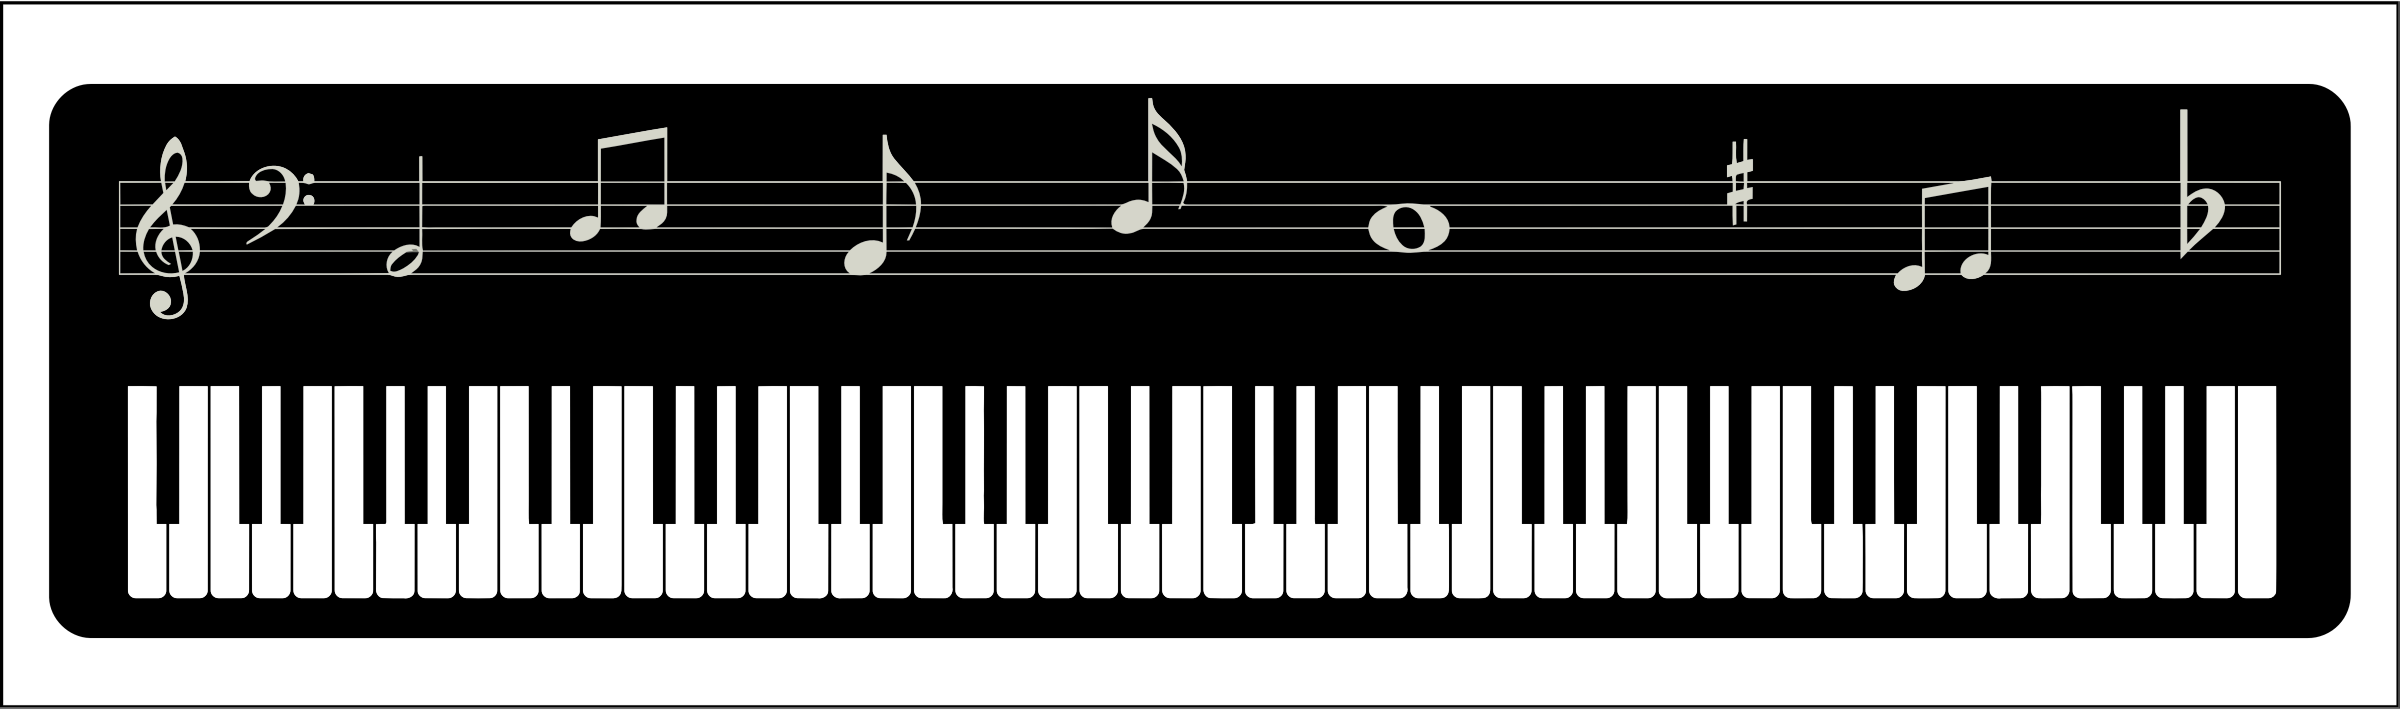 Цифровая музыкальная клавиатура PNG Image